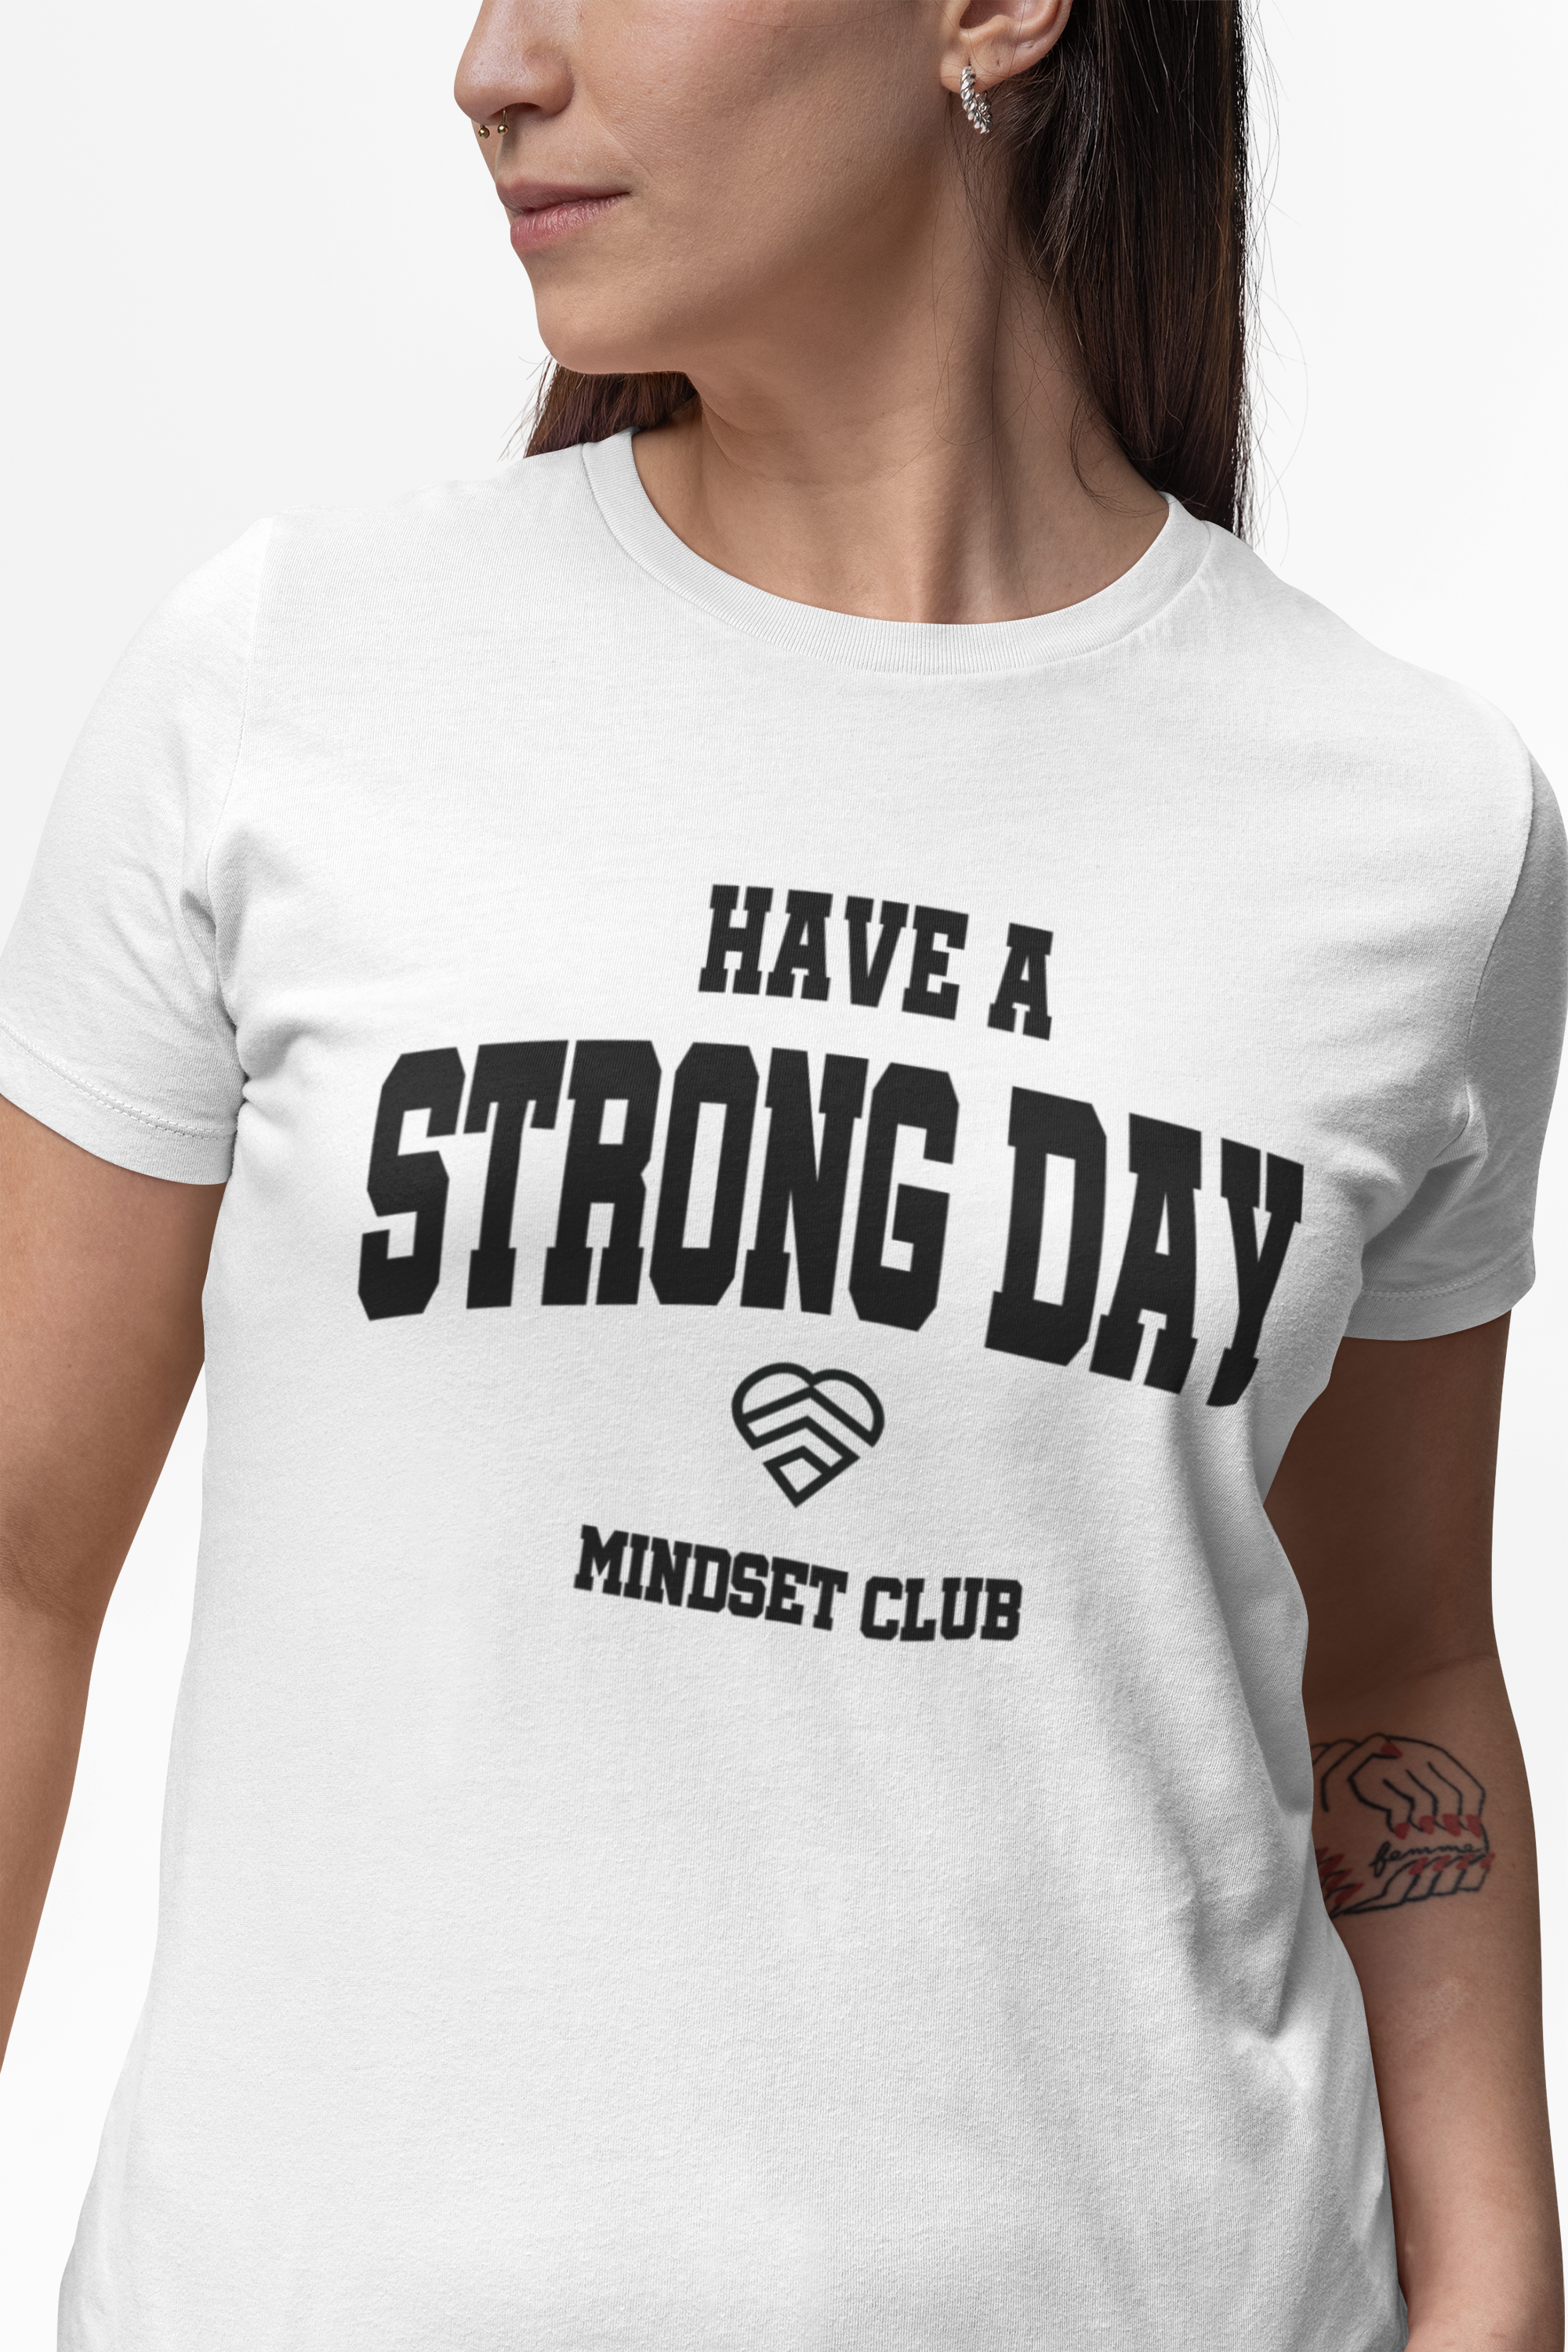 Mindset Club Statement Shirt - White & Black